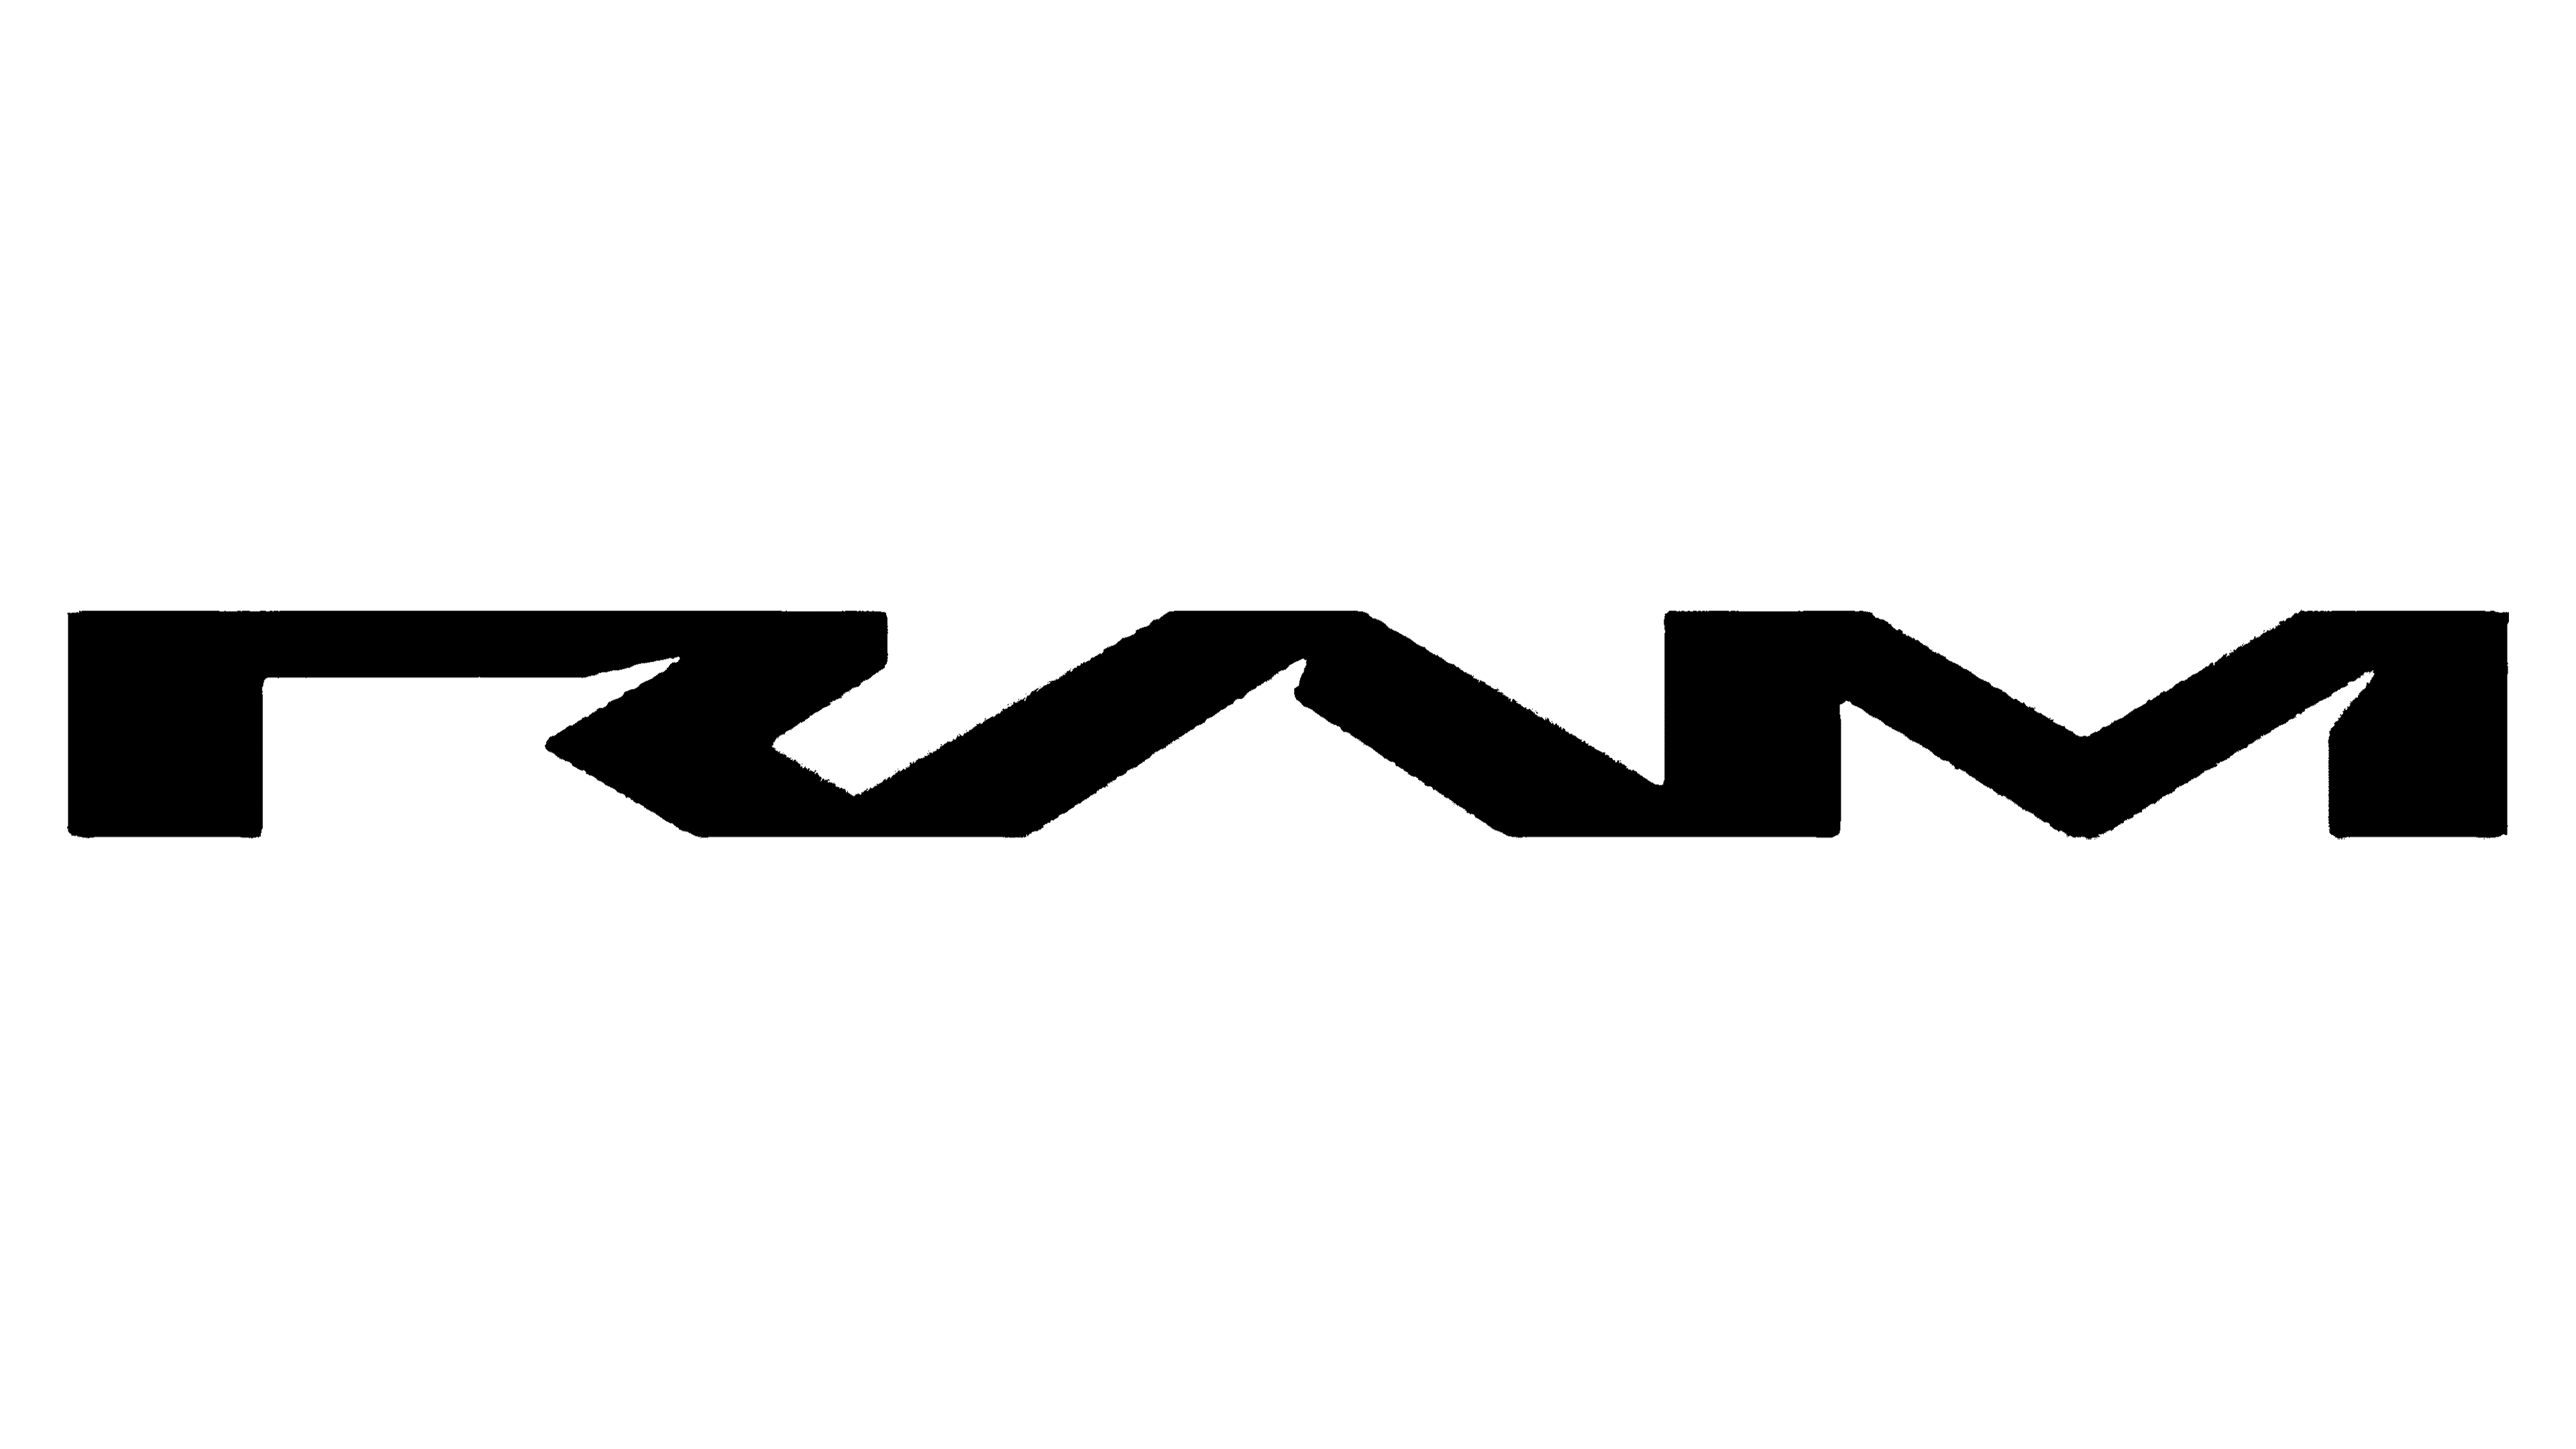 new ram logo